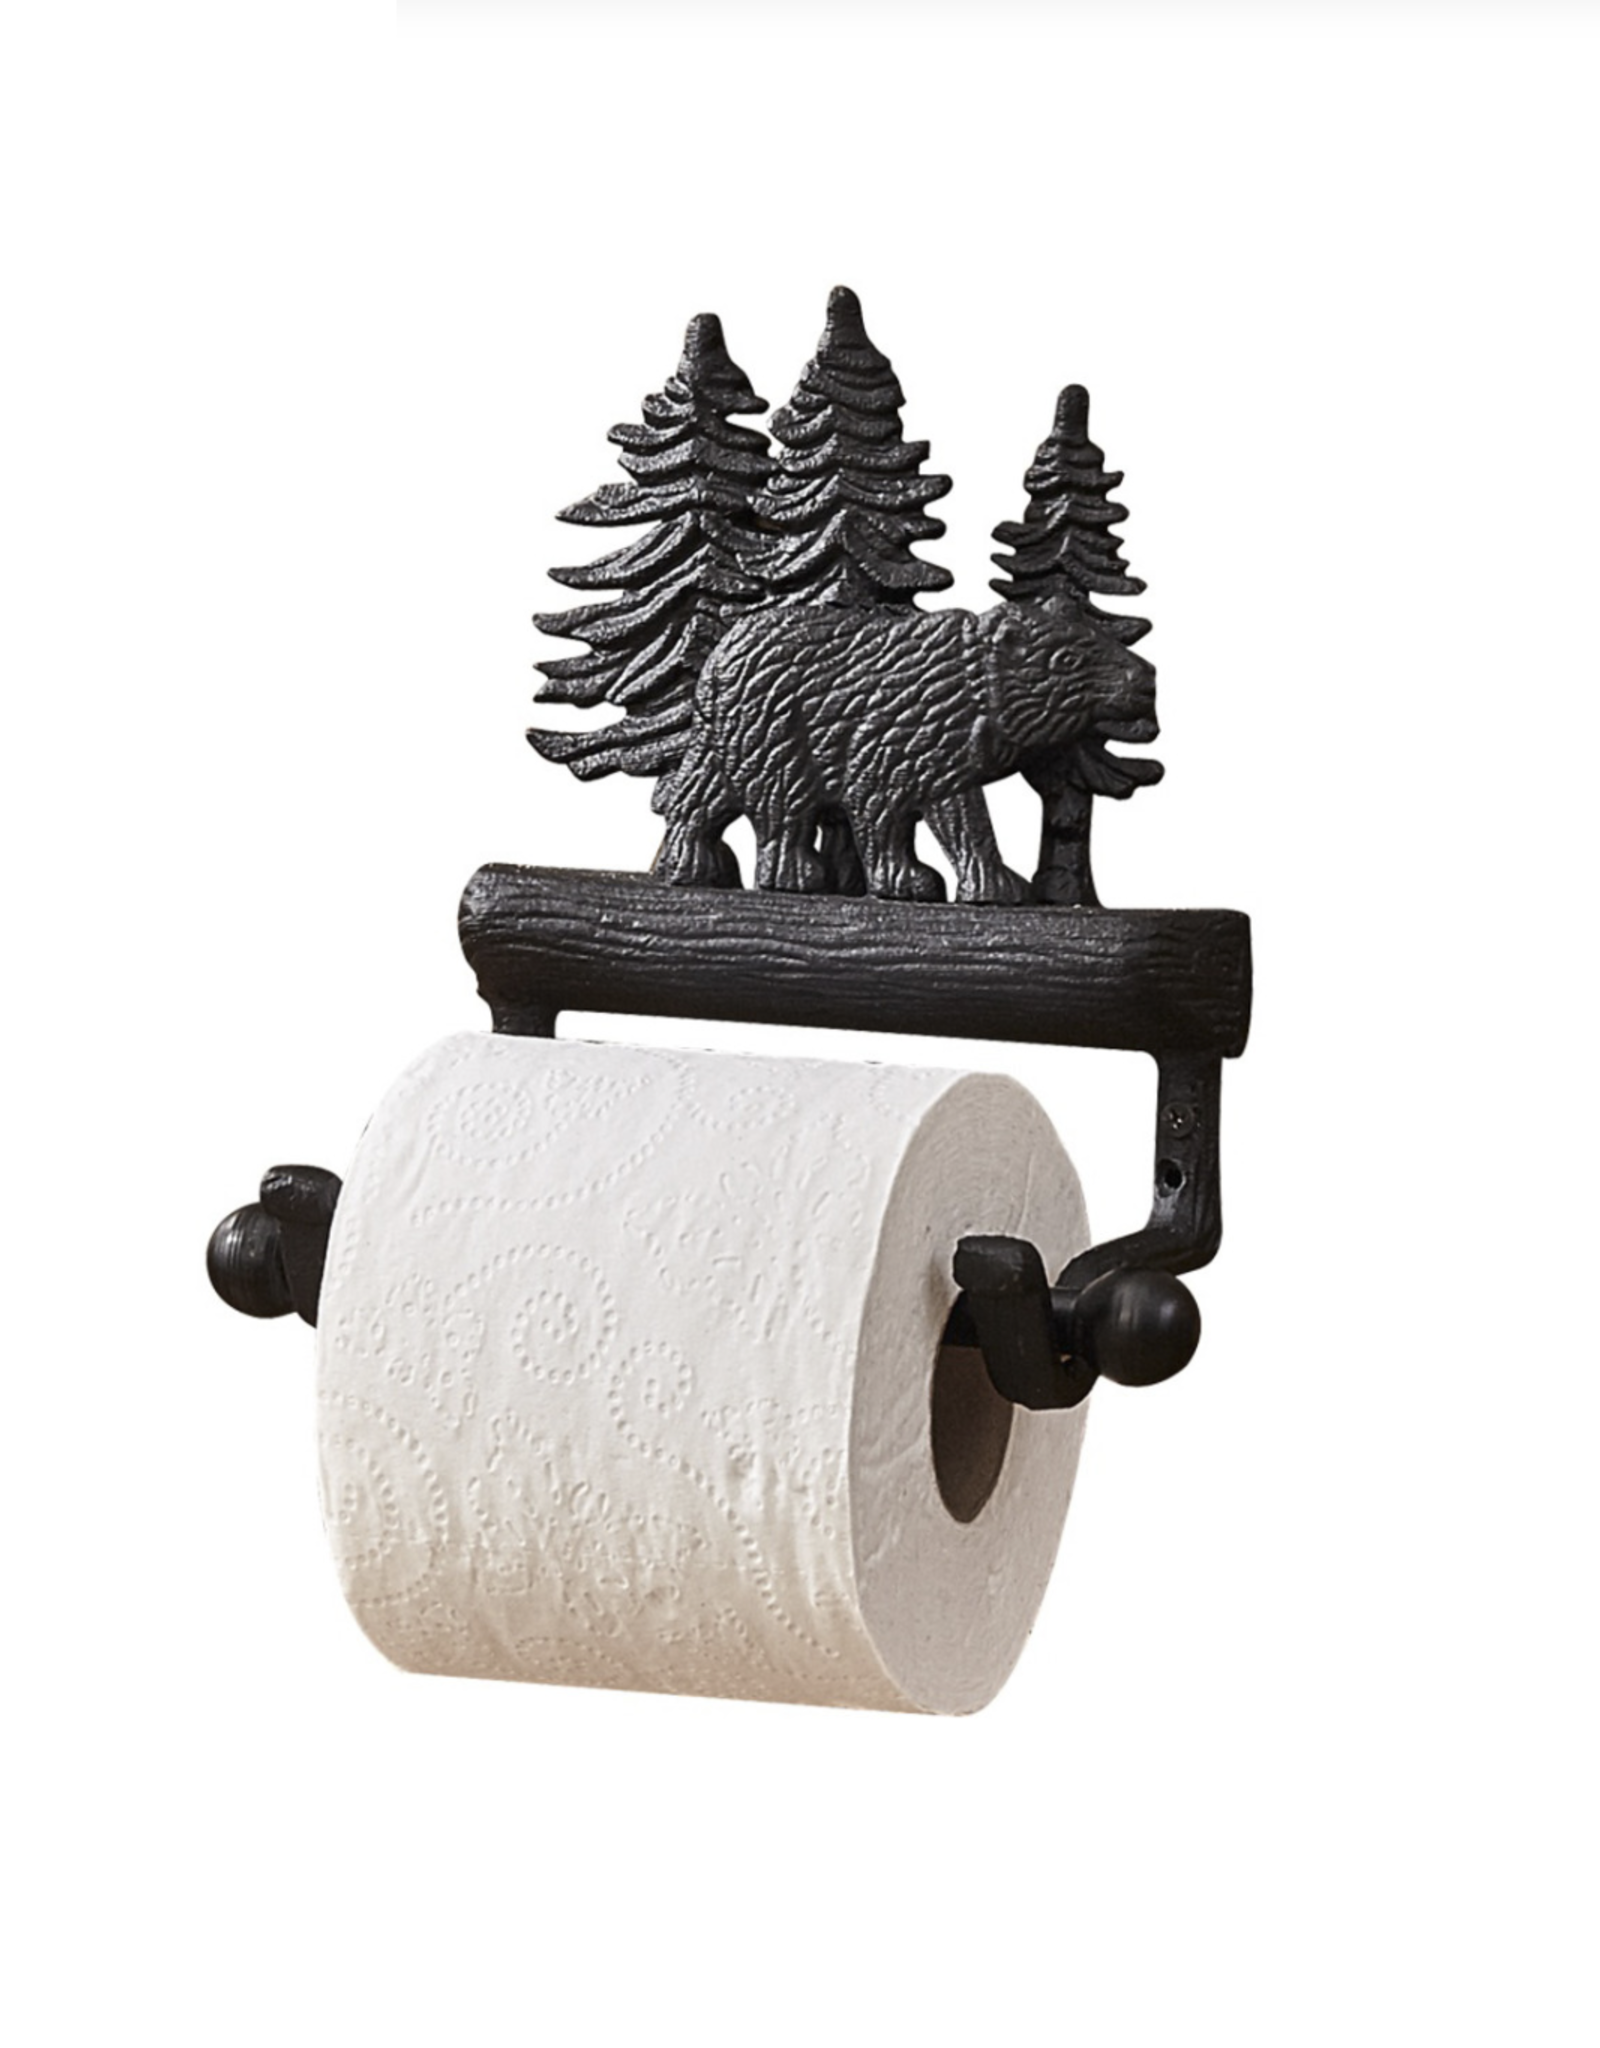 Park Designs Toilet Tissue Holder - Cast Black Bear